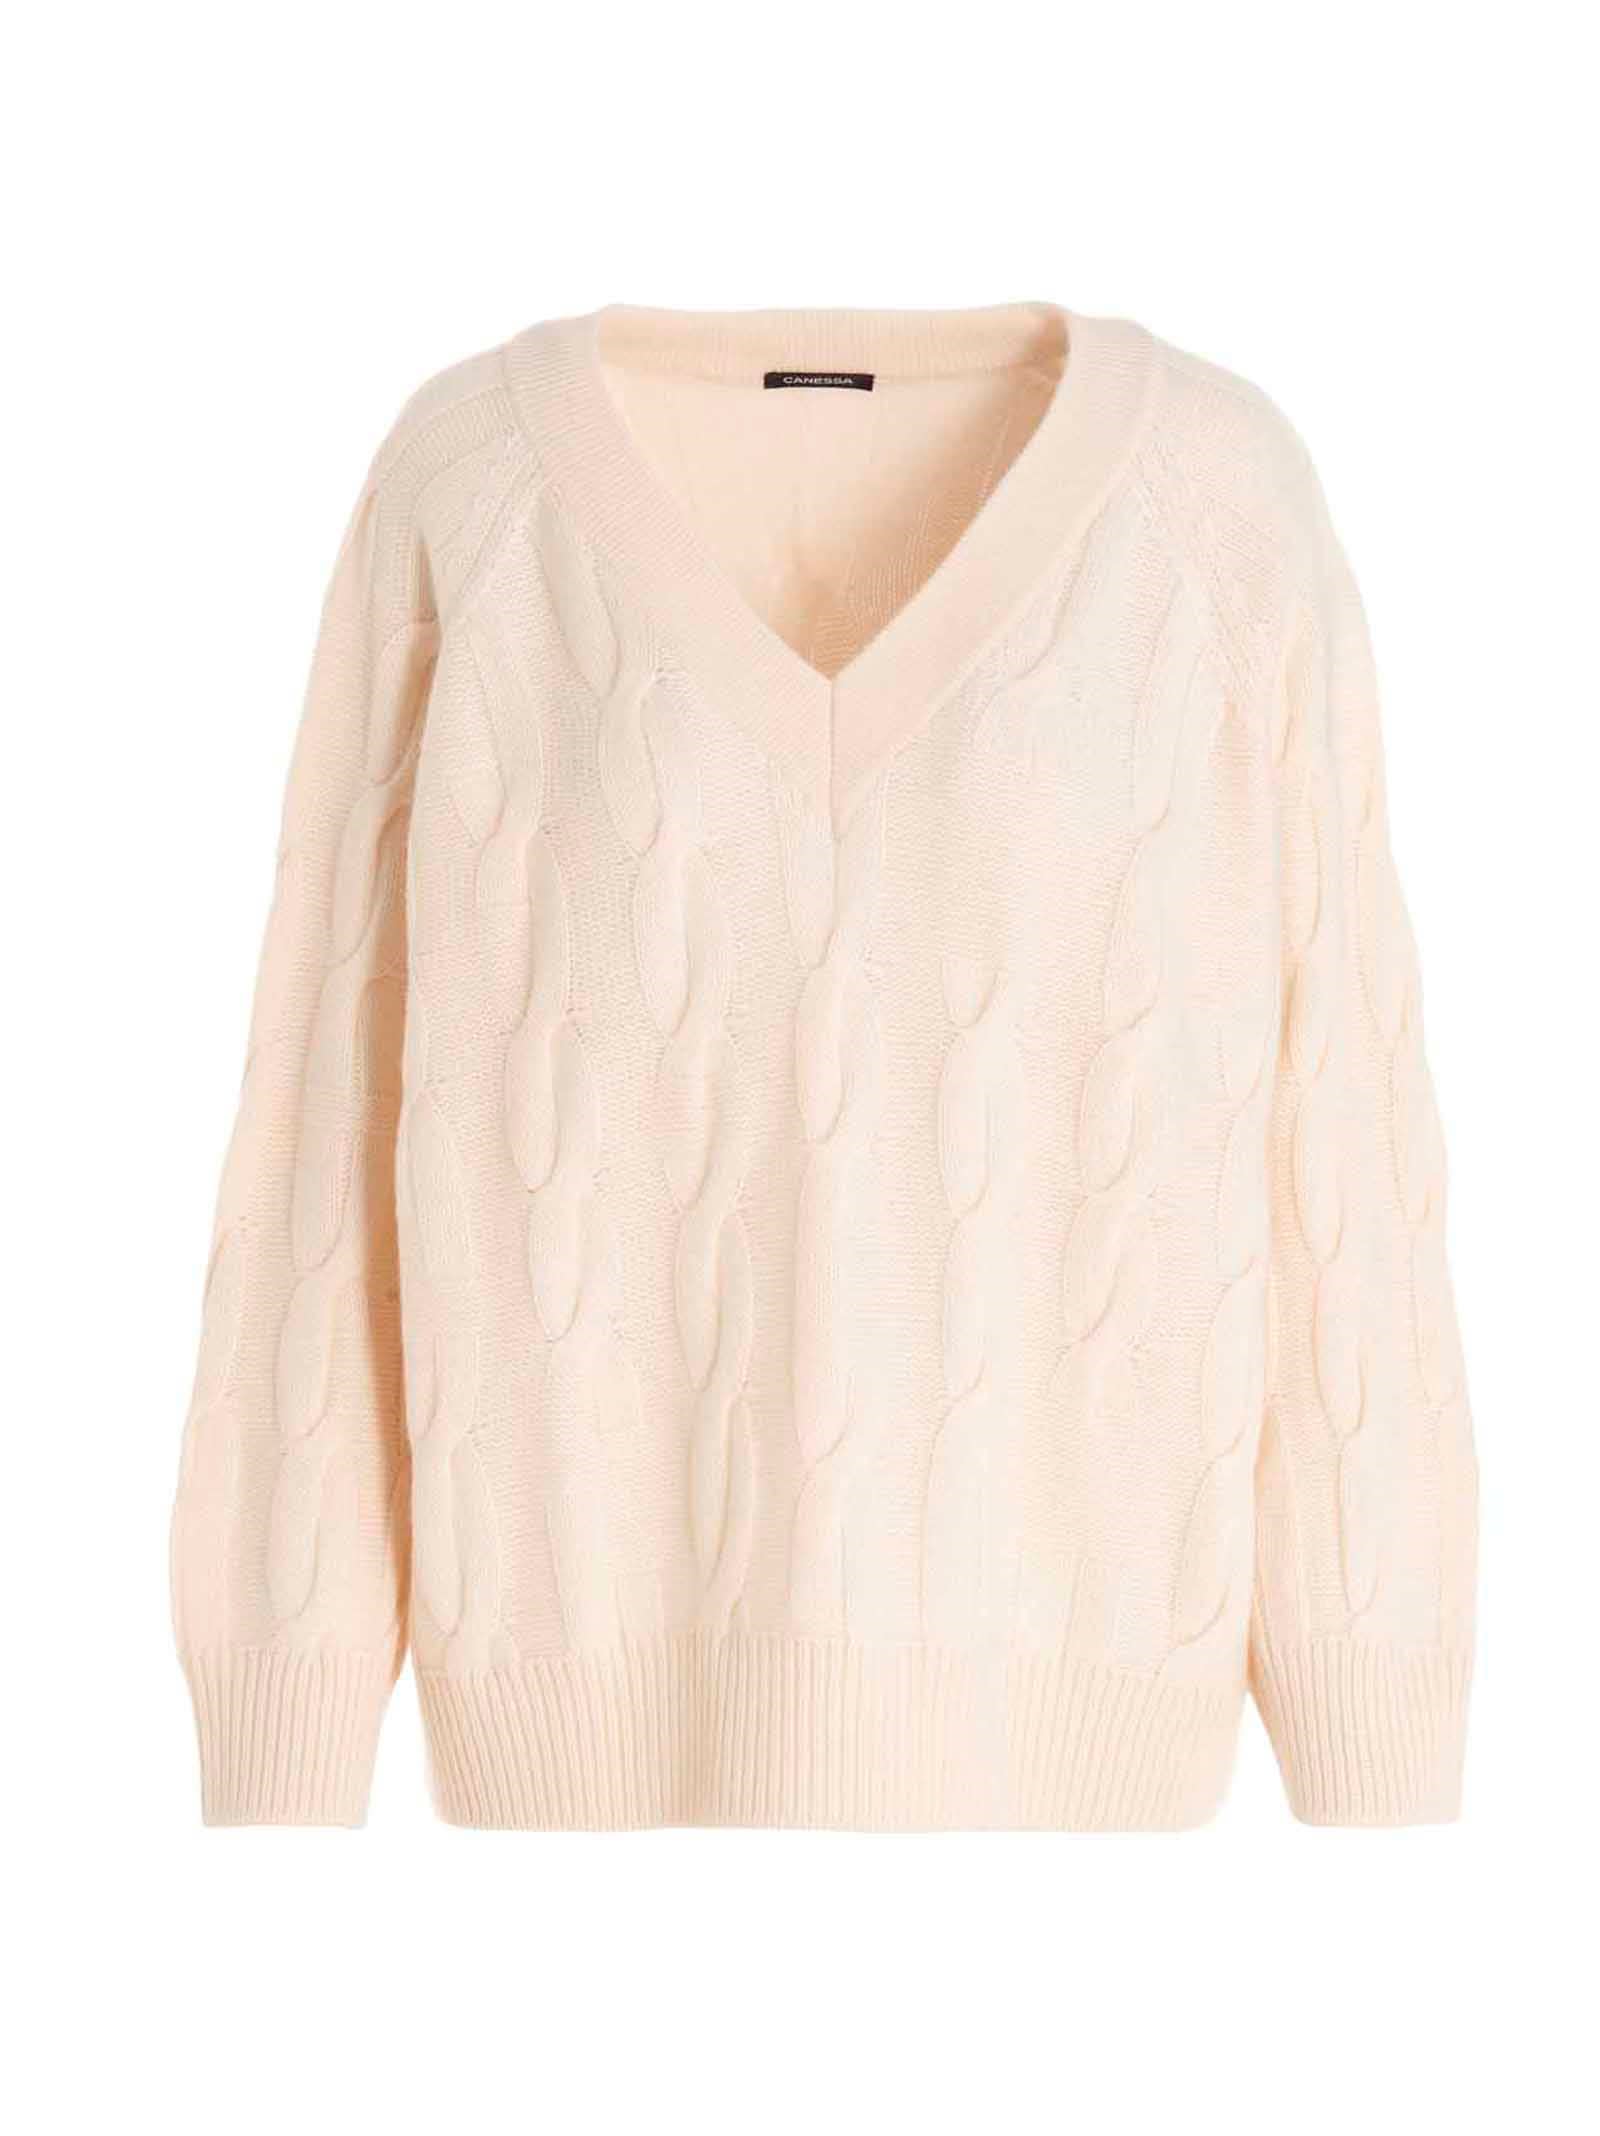 Canessa Braided Cashmere Sweater